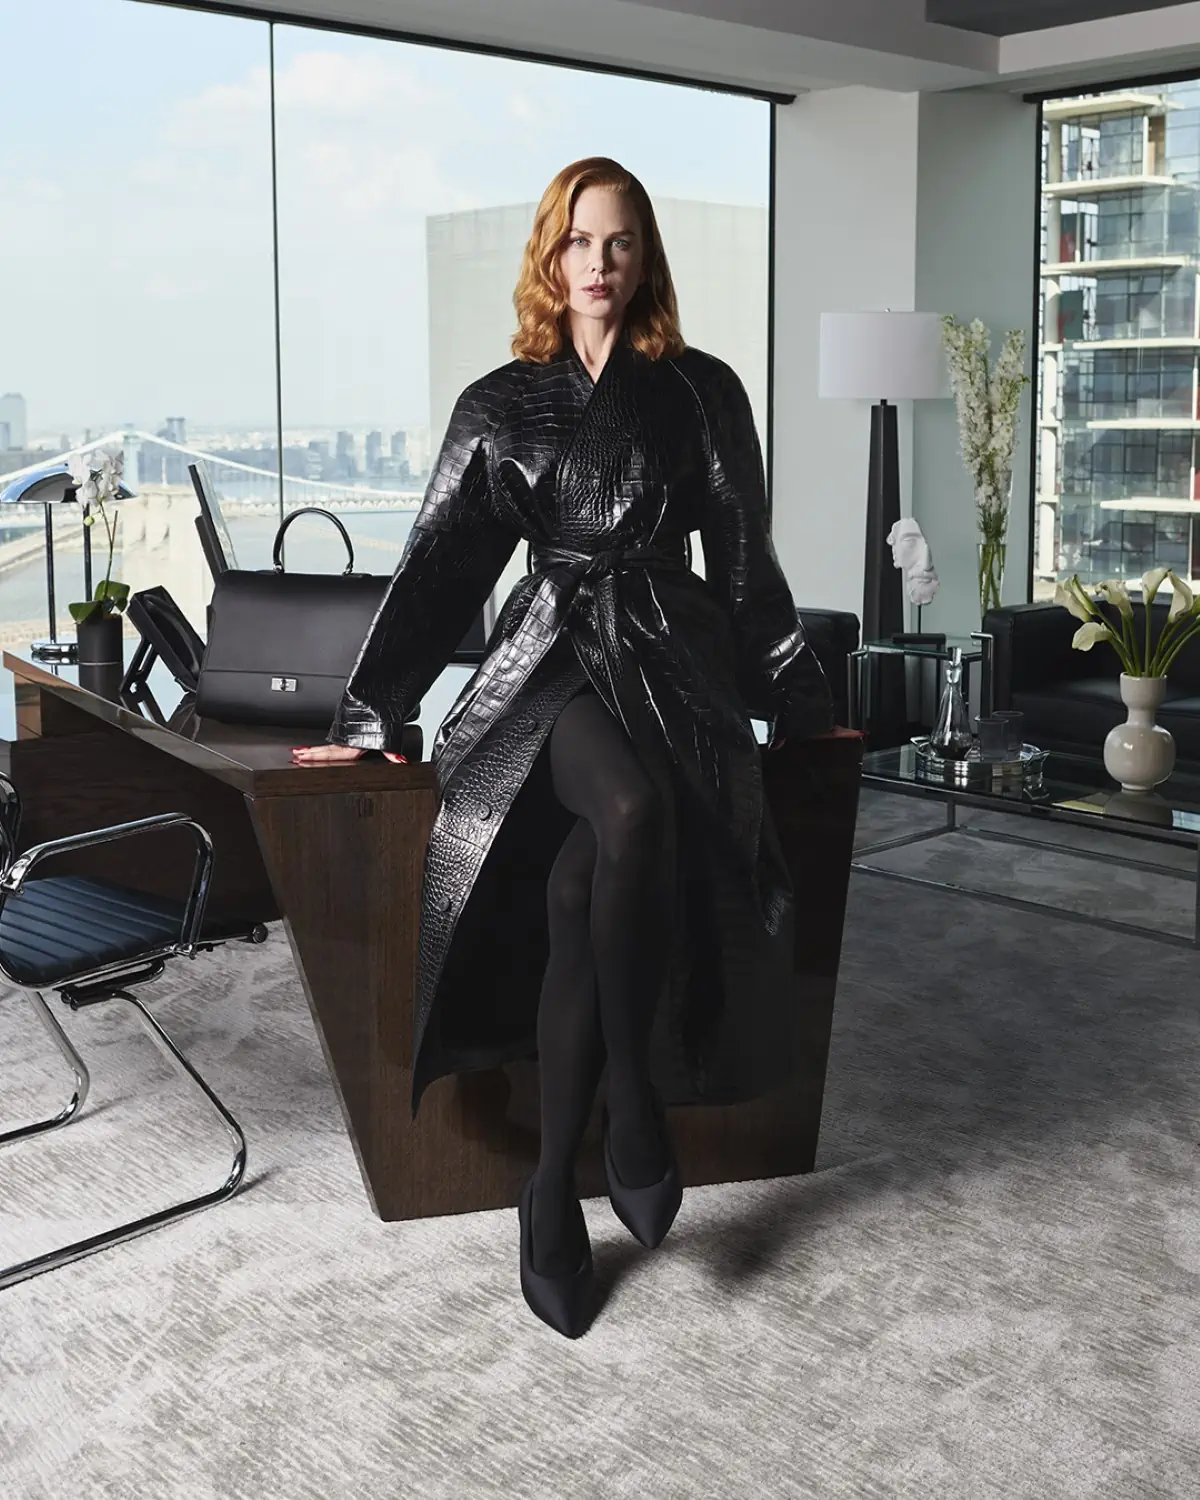 Nicole Kidman becomes Balenciaga brand ambassador